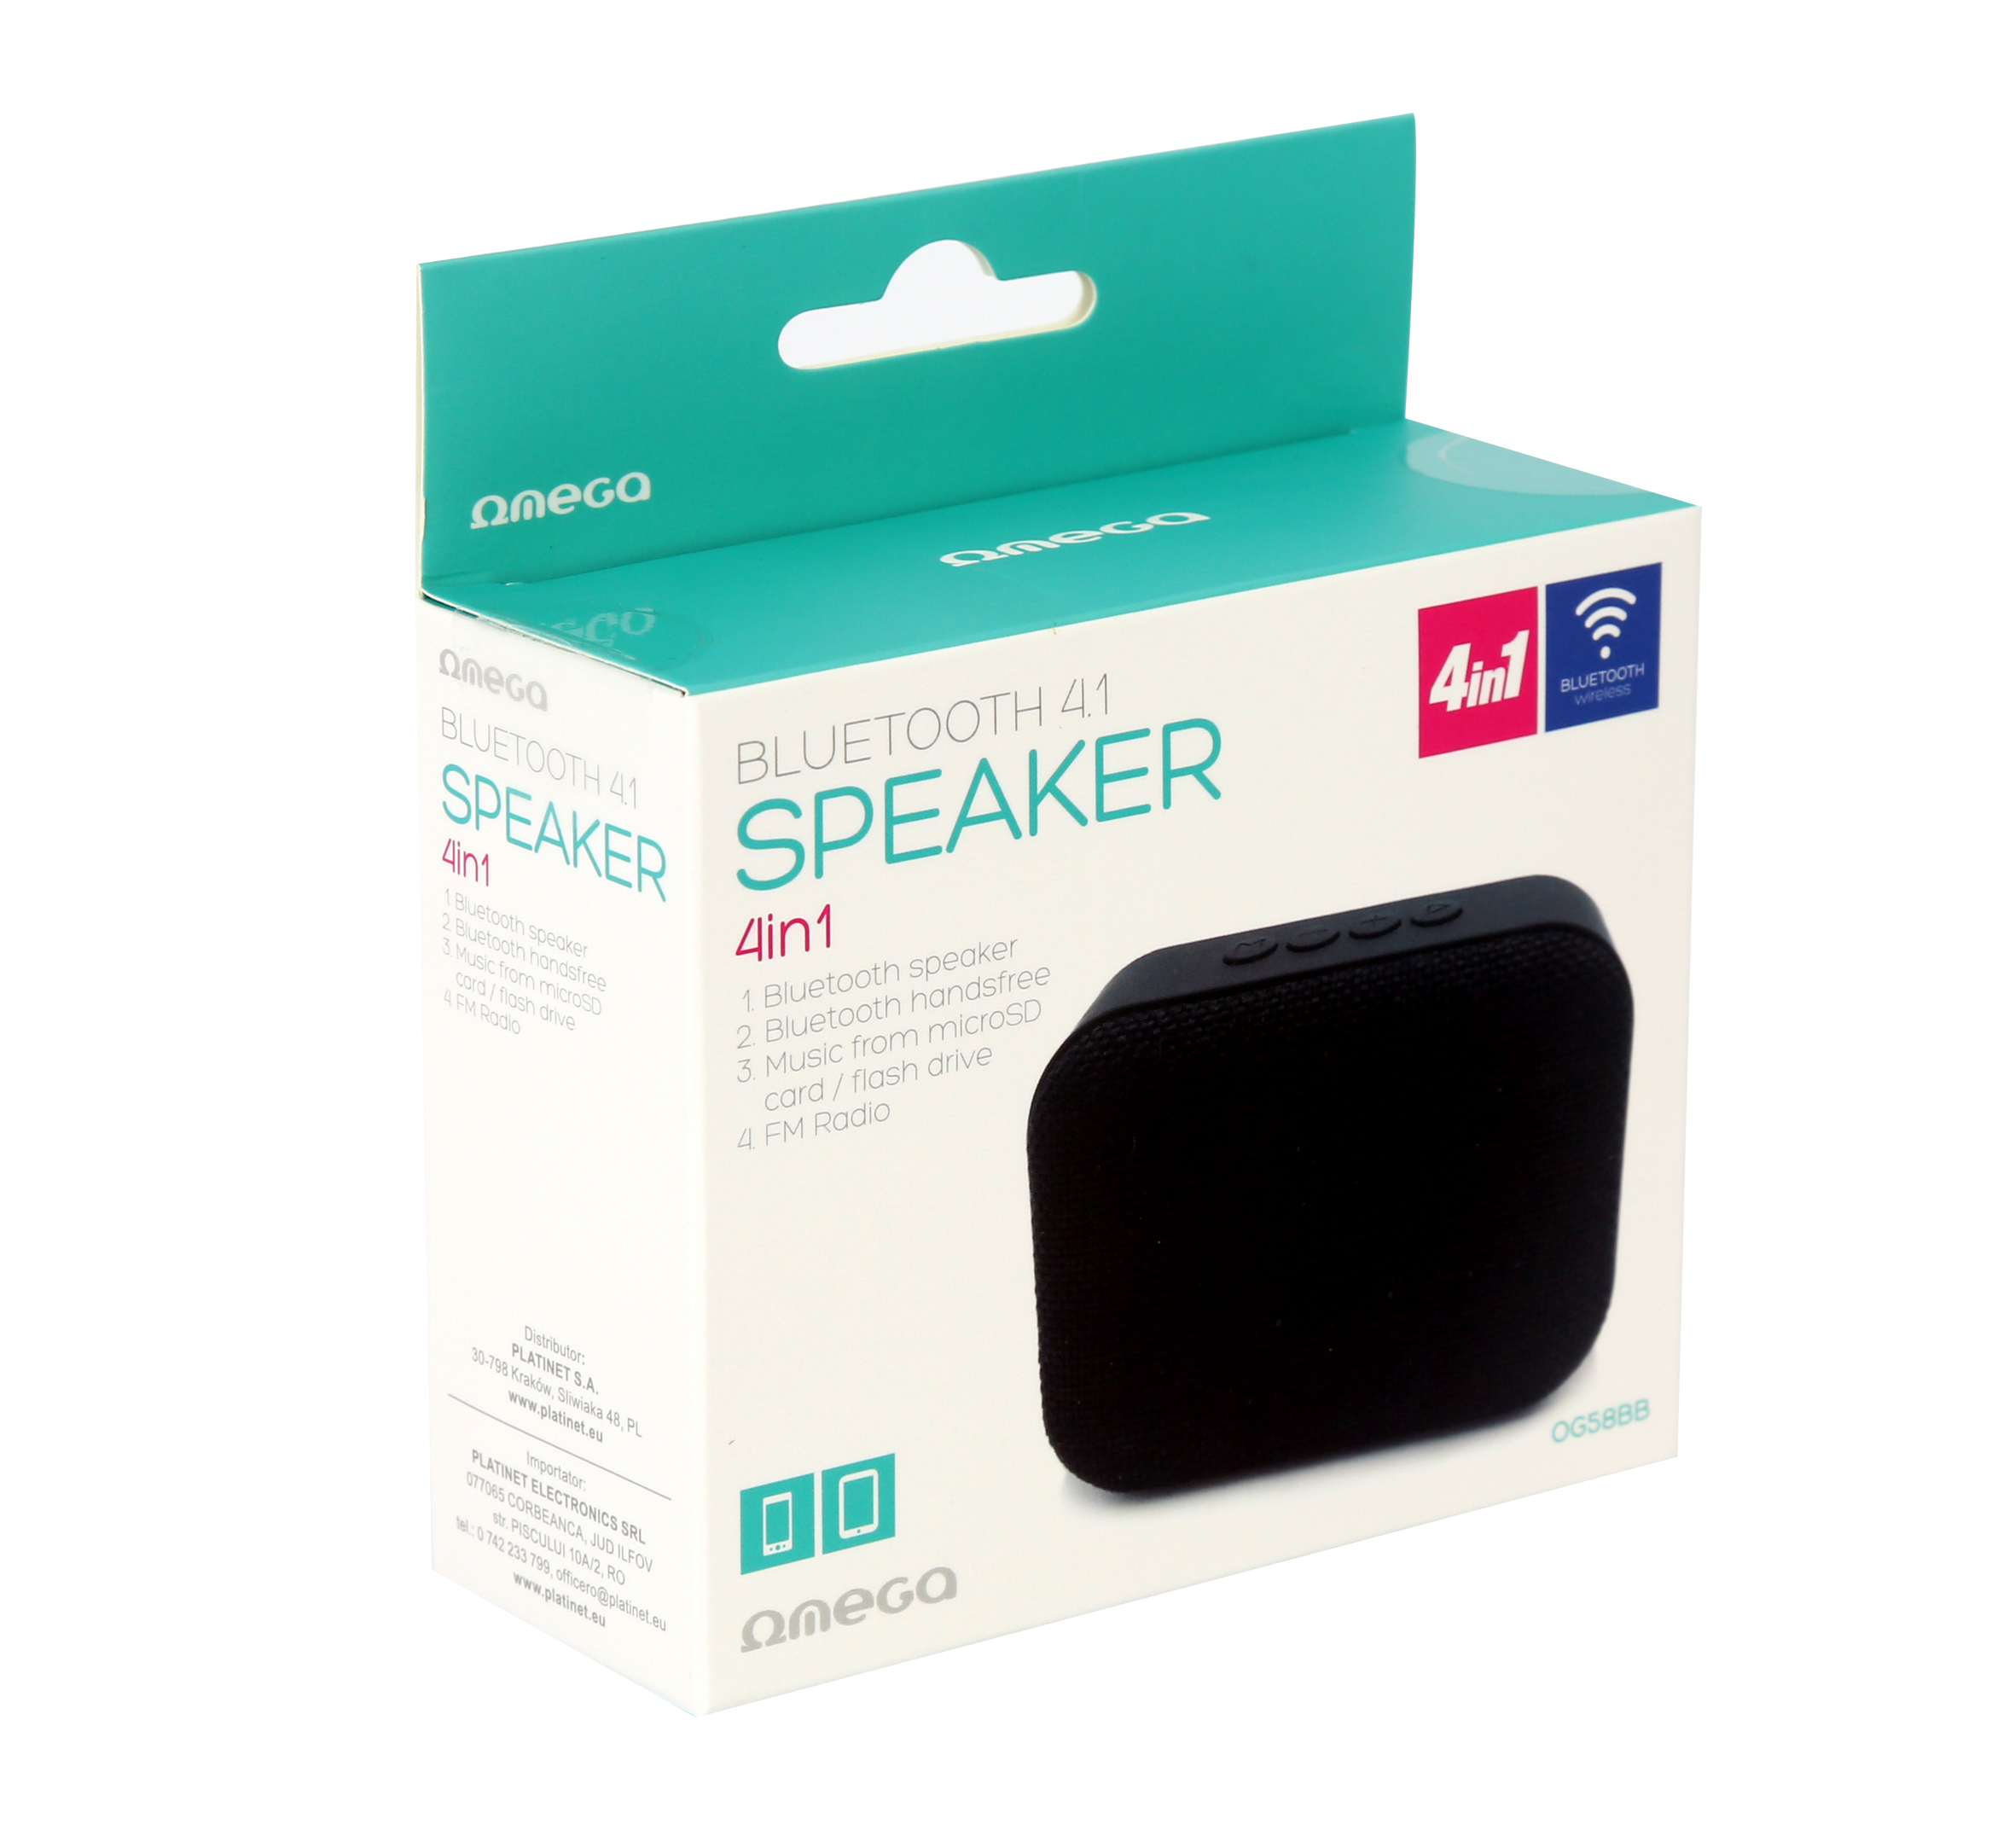 OMEGA Bluetooth 4.1 Wireless Speaker with FM Radio / Handsfree / MicroSD / USB / 3W / Black fabric